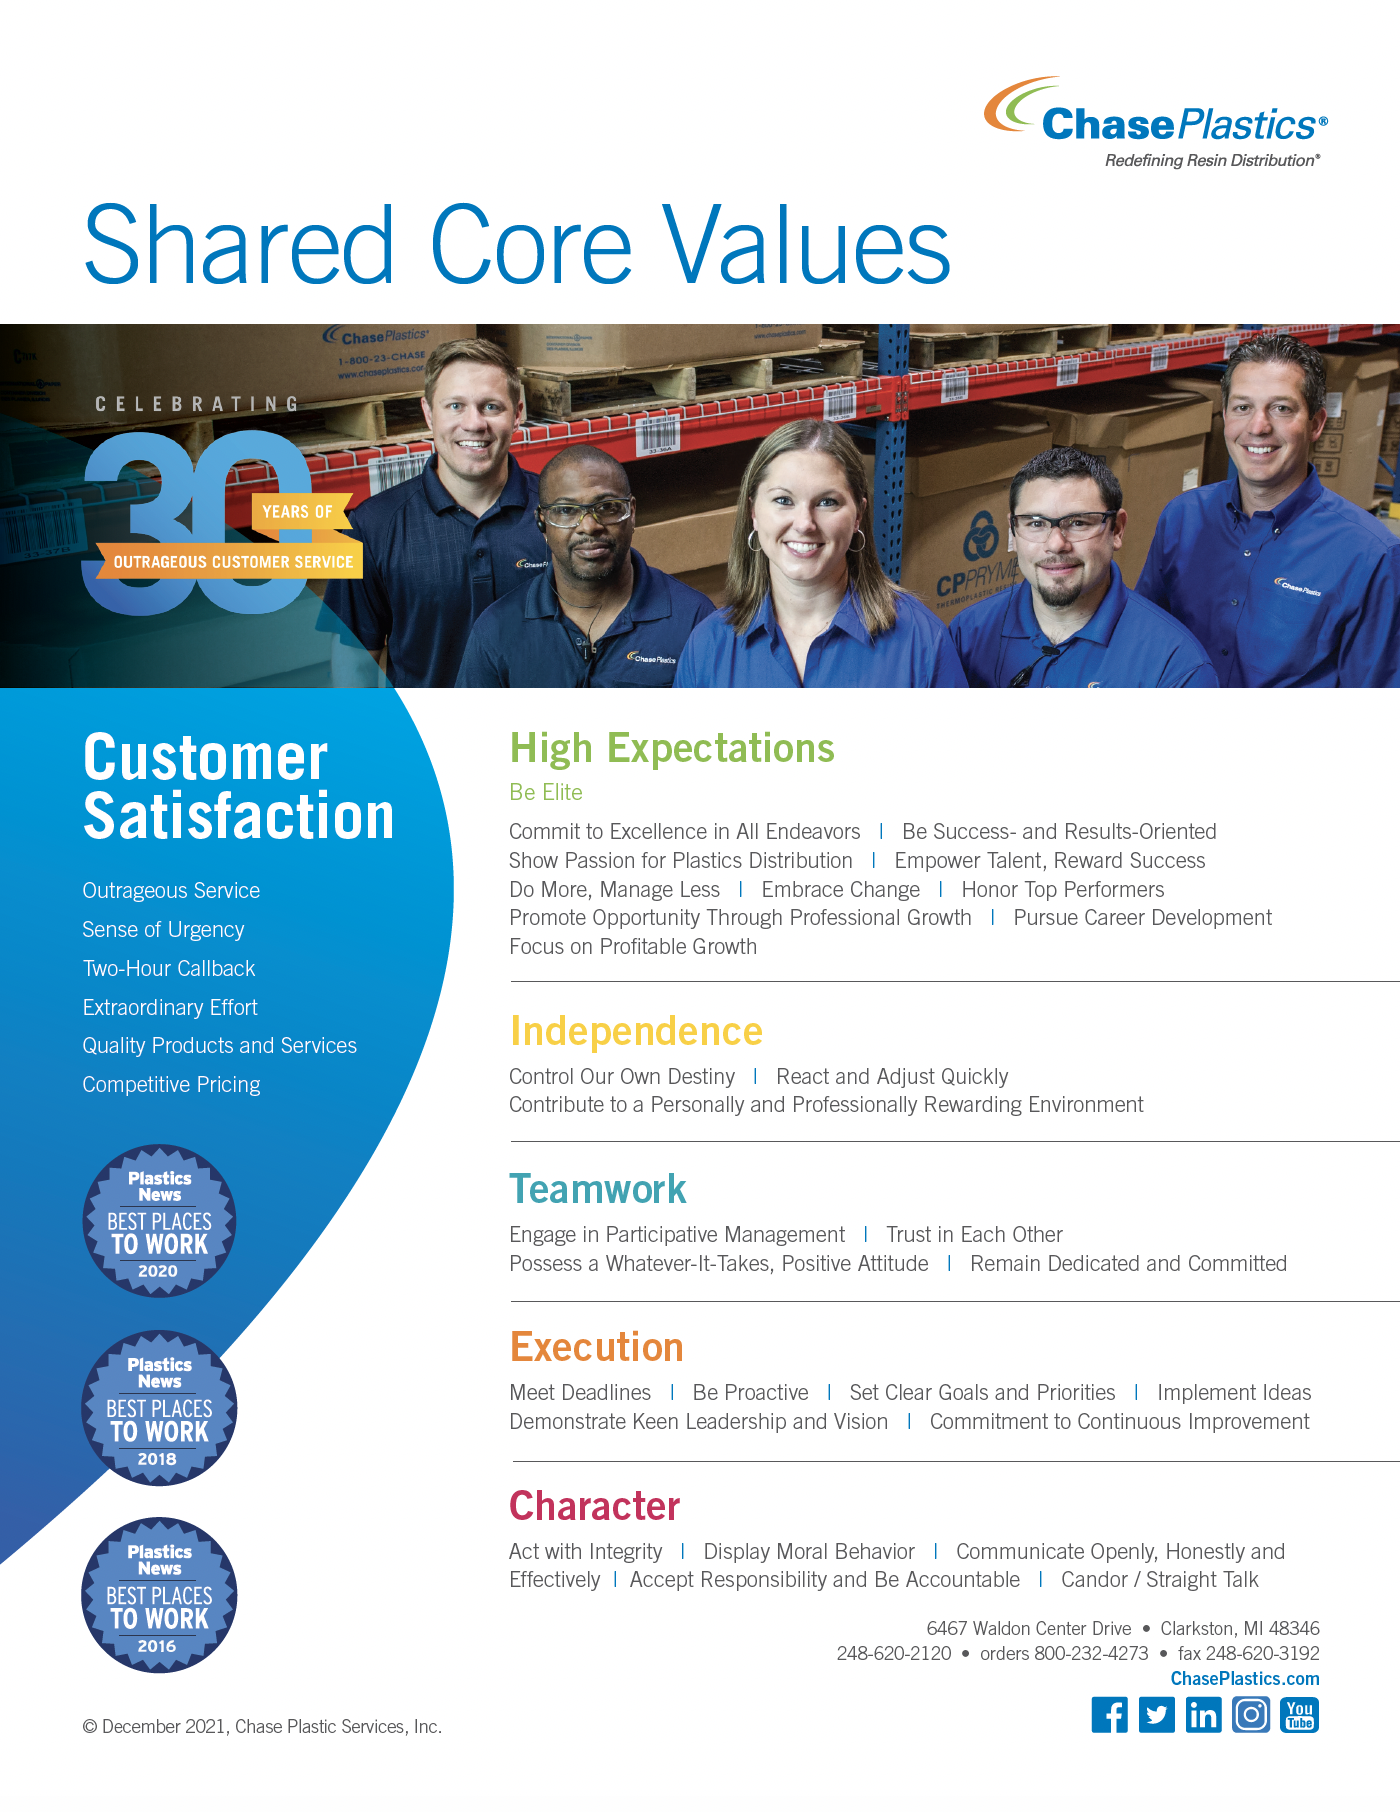 Our Core Values